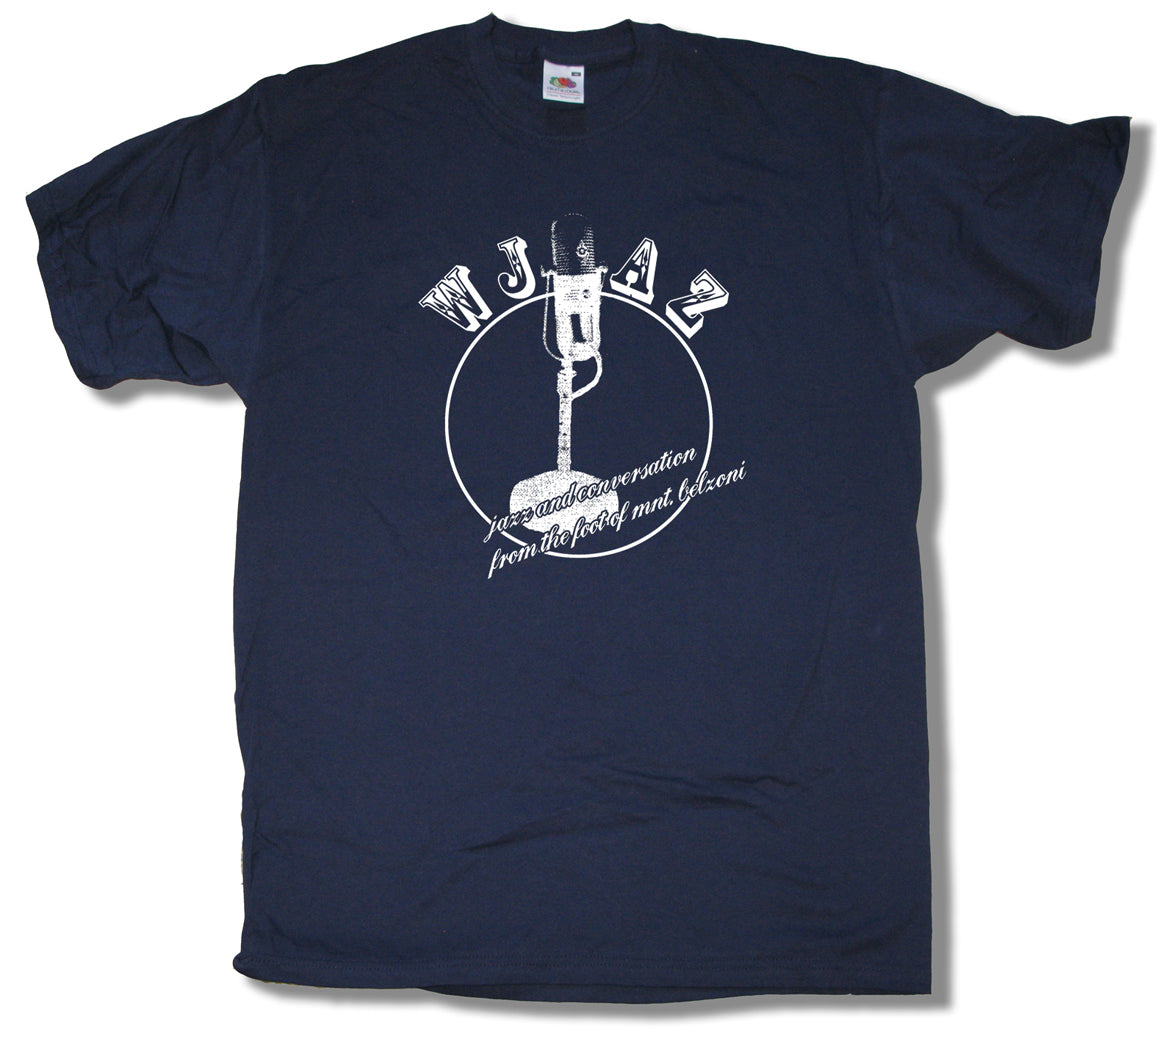 WJAZ T Shirt - For Donald Fagen / Steely Dan Jazz Fusion Afficionados